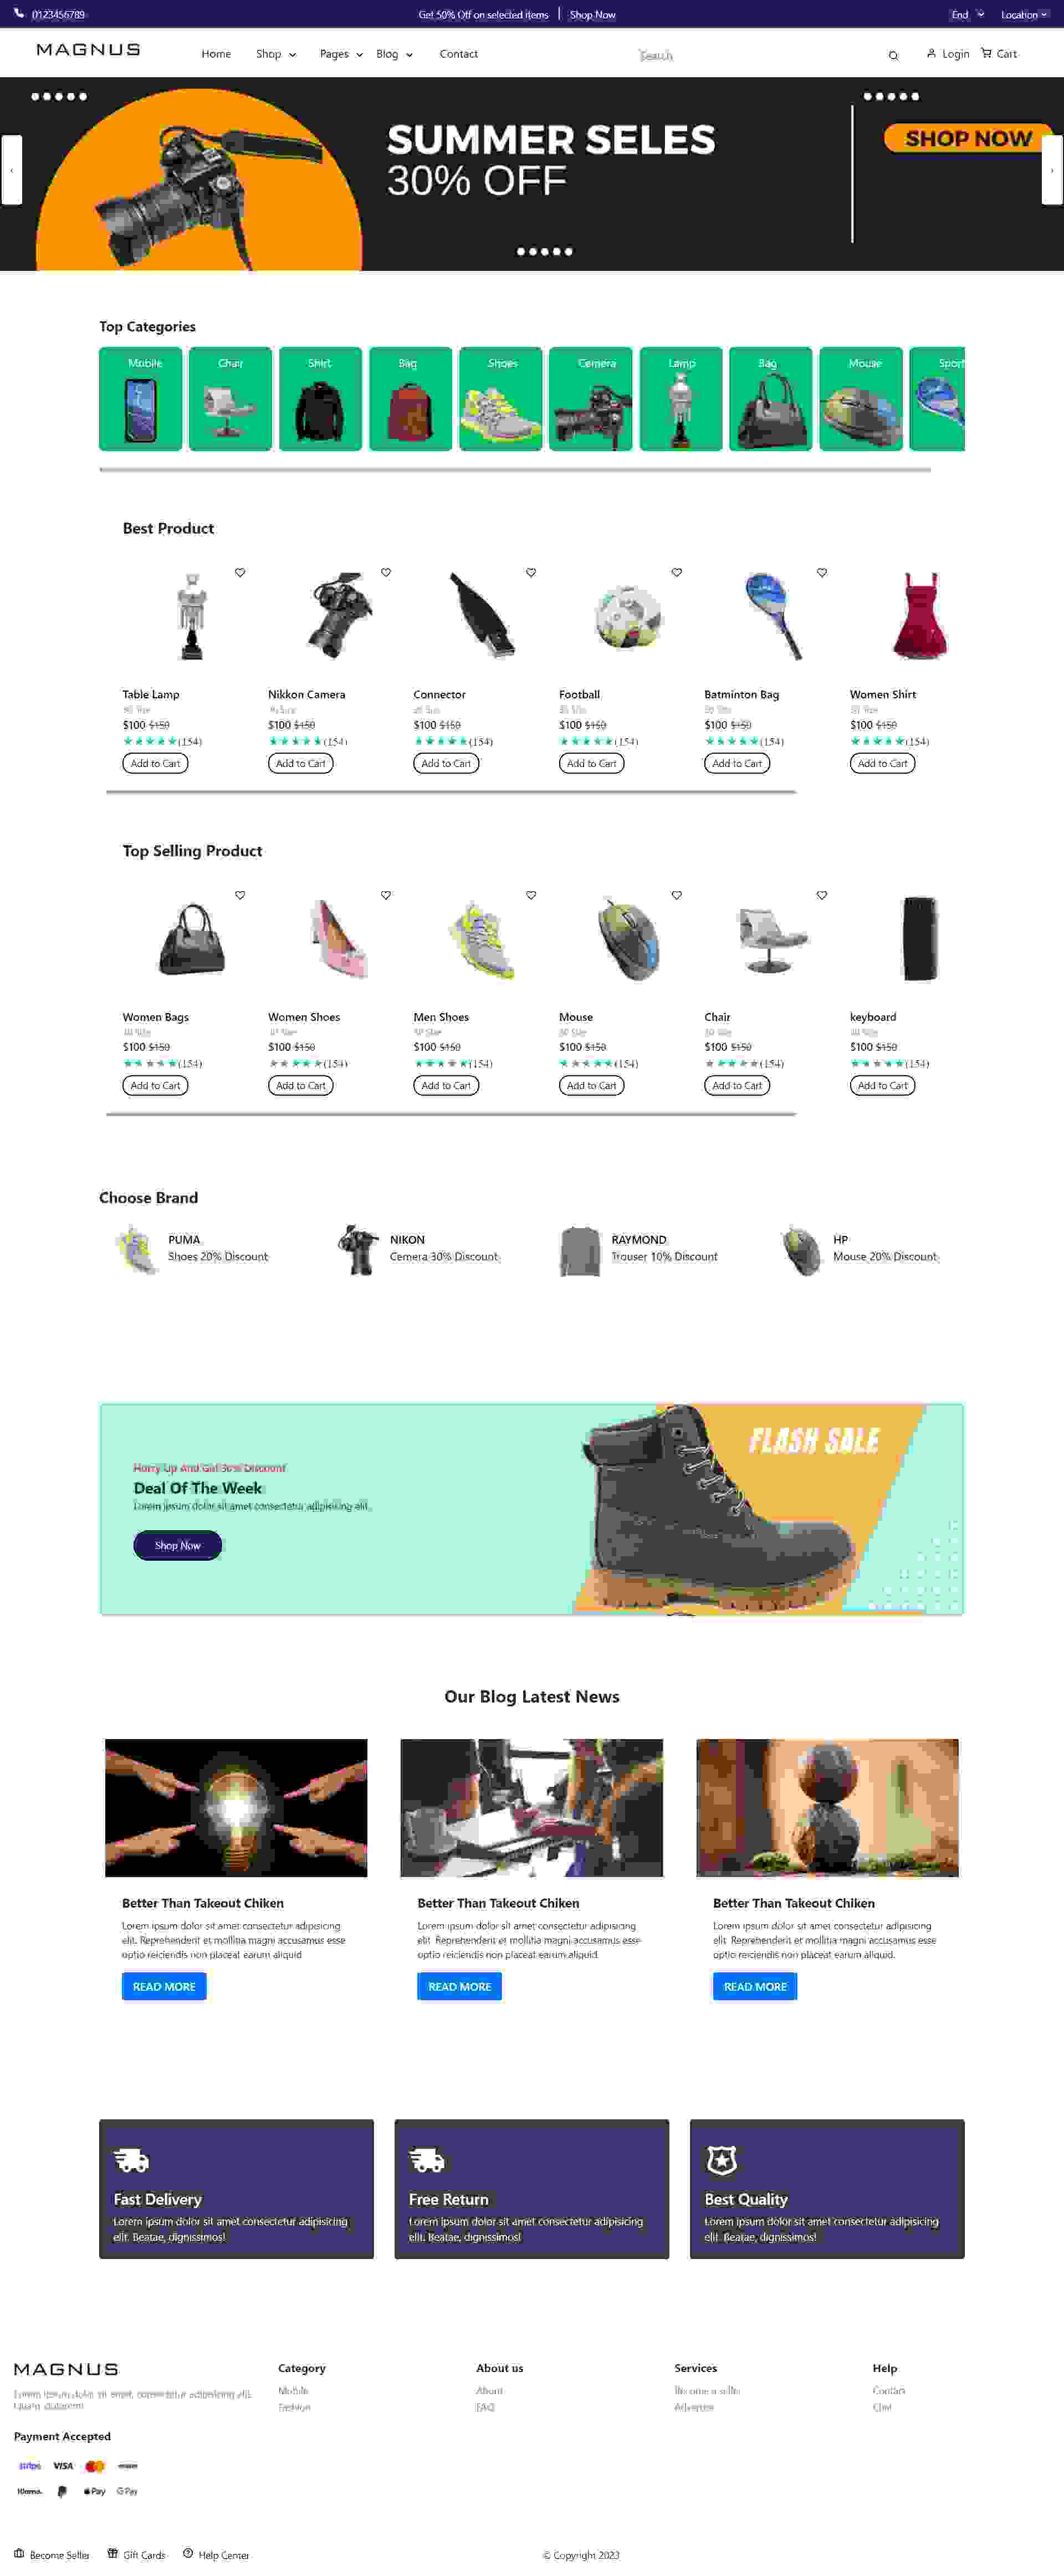 Magnus – Free Bootstrap 4 Multipurpose eCommerce Website Template